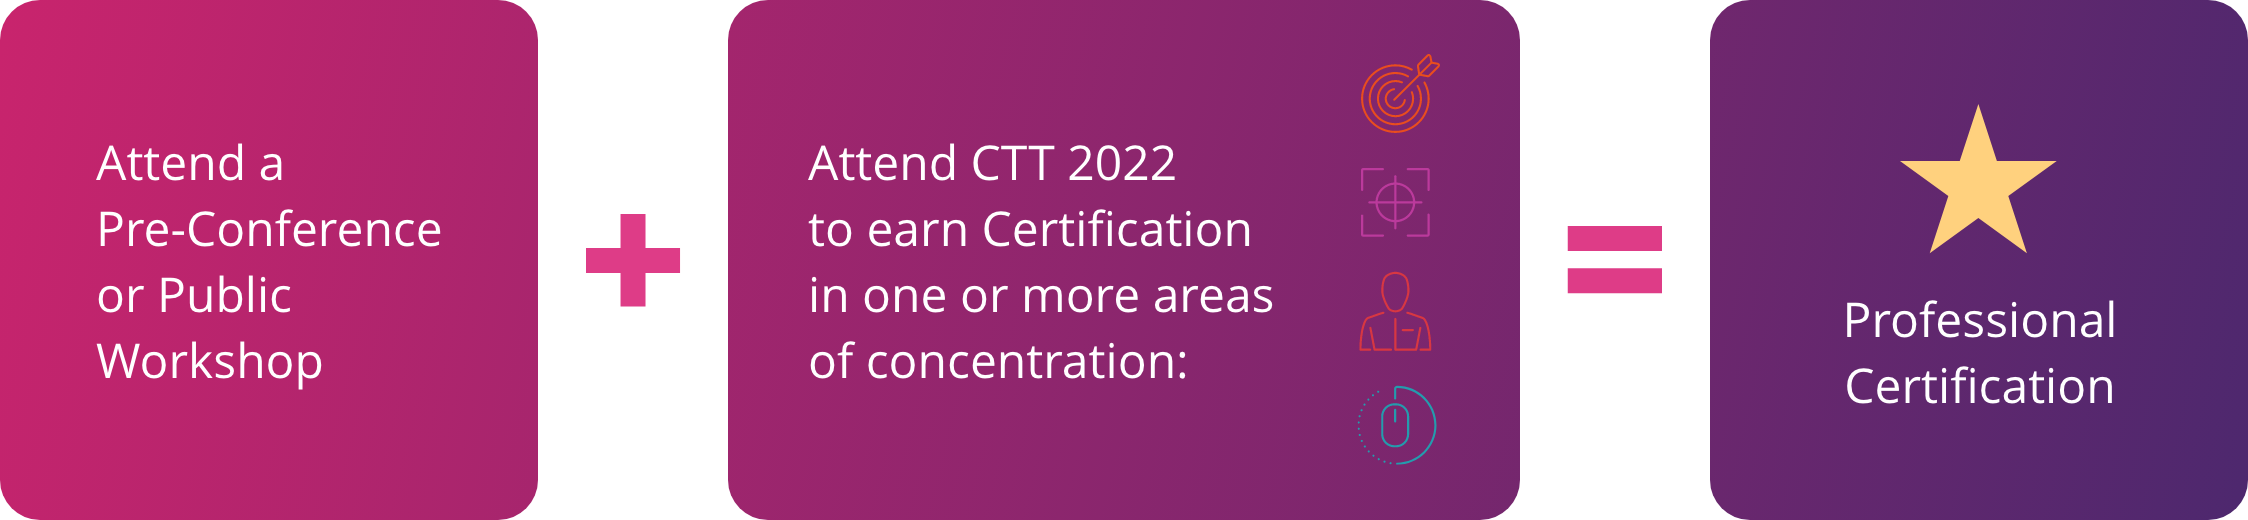 ctt-certification-intro-graphic